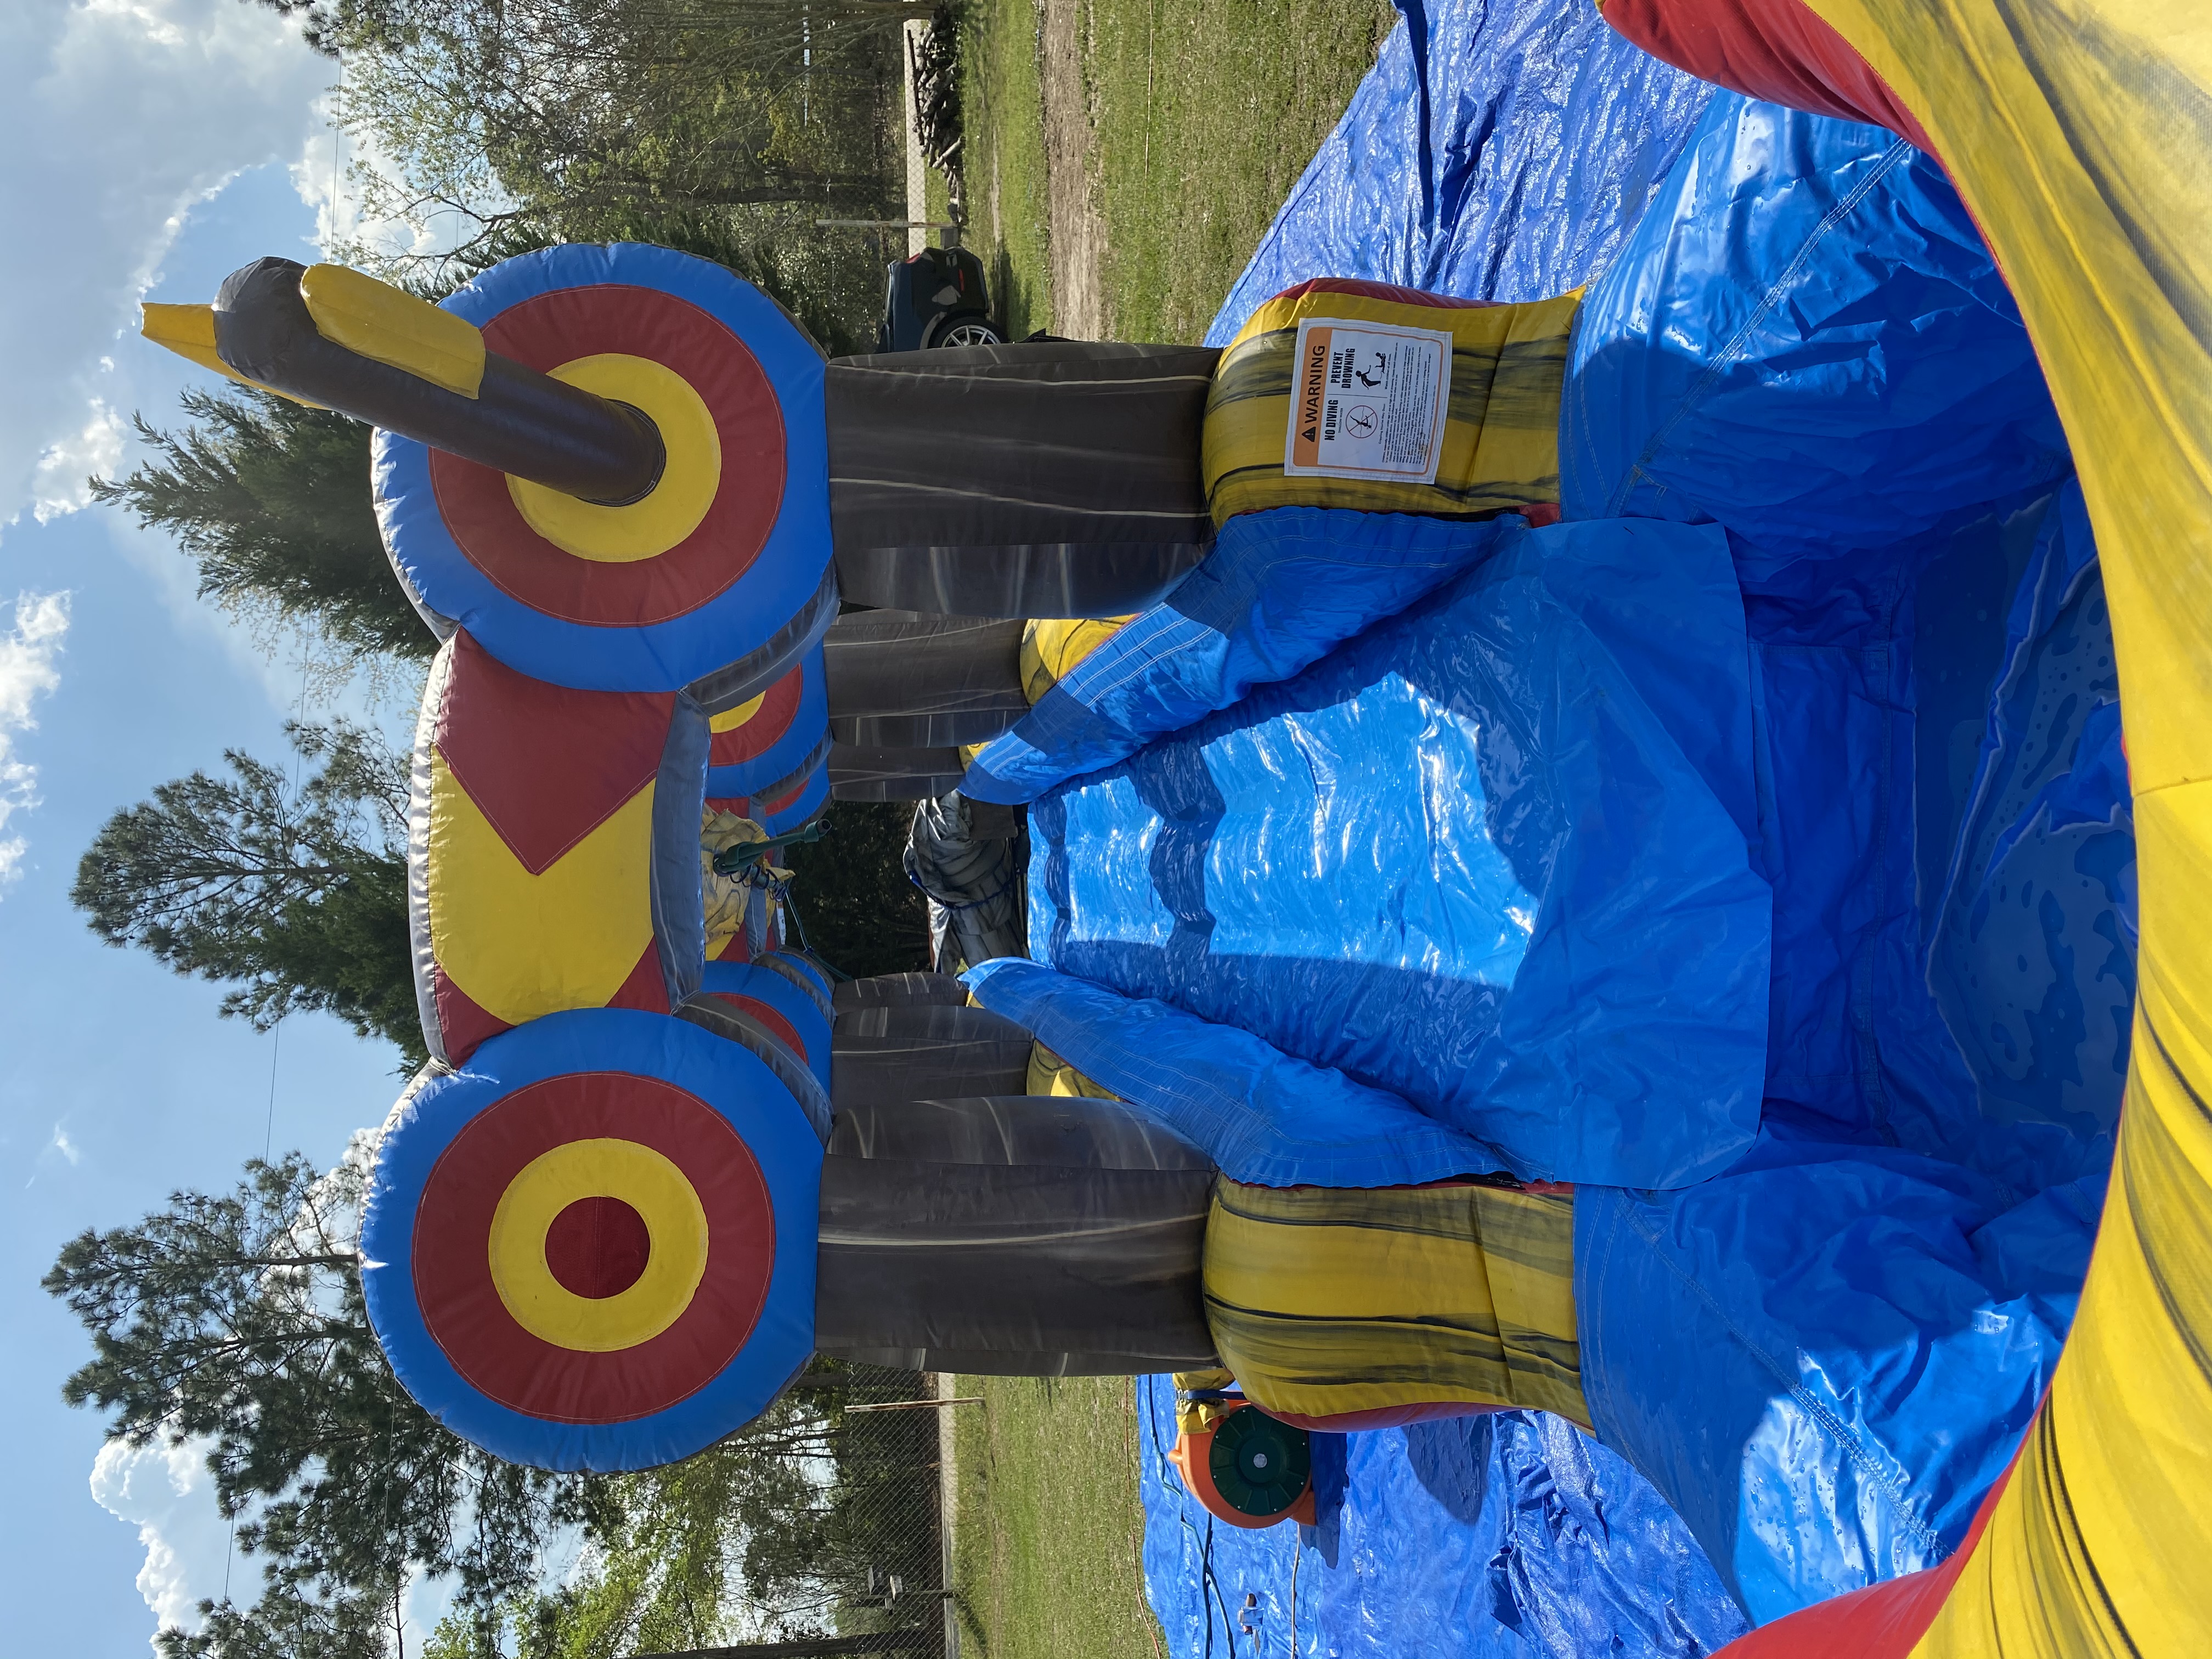 Target Slip n Slide Inflatable Rentals, Bounce House Rentals, Water Slide in Norman park